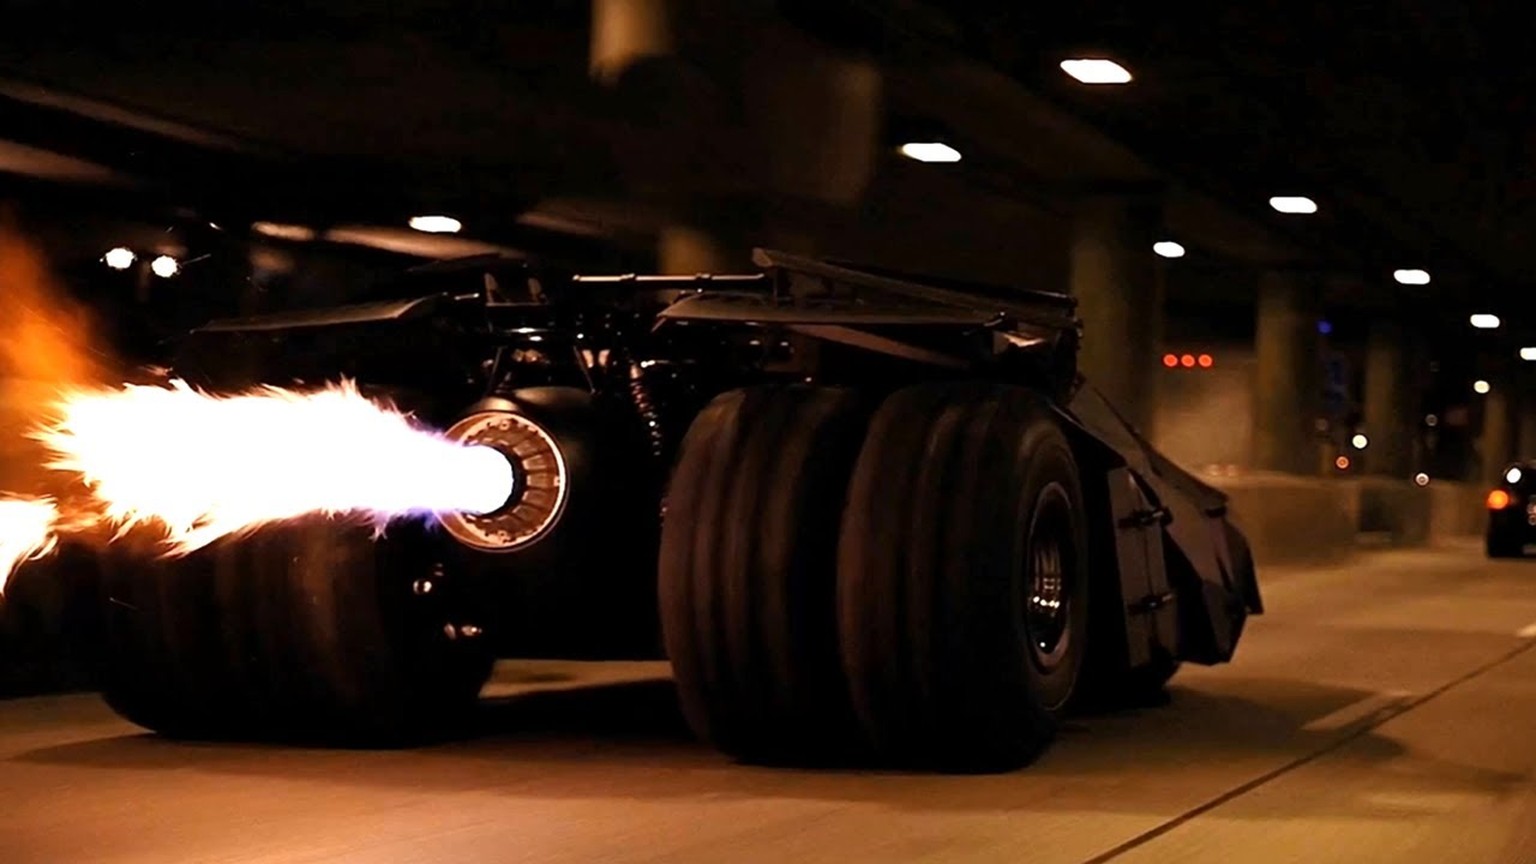 tumbler the dark knight batman batmobile auto film movie dc comics https://www.youtube.com/watch?v=fYqlI9mdtVA